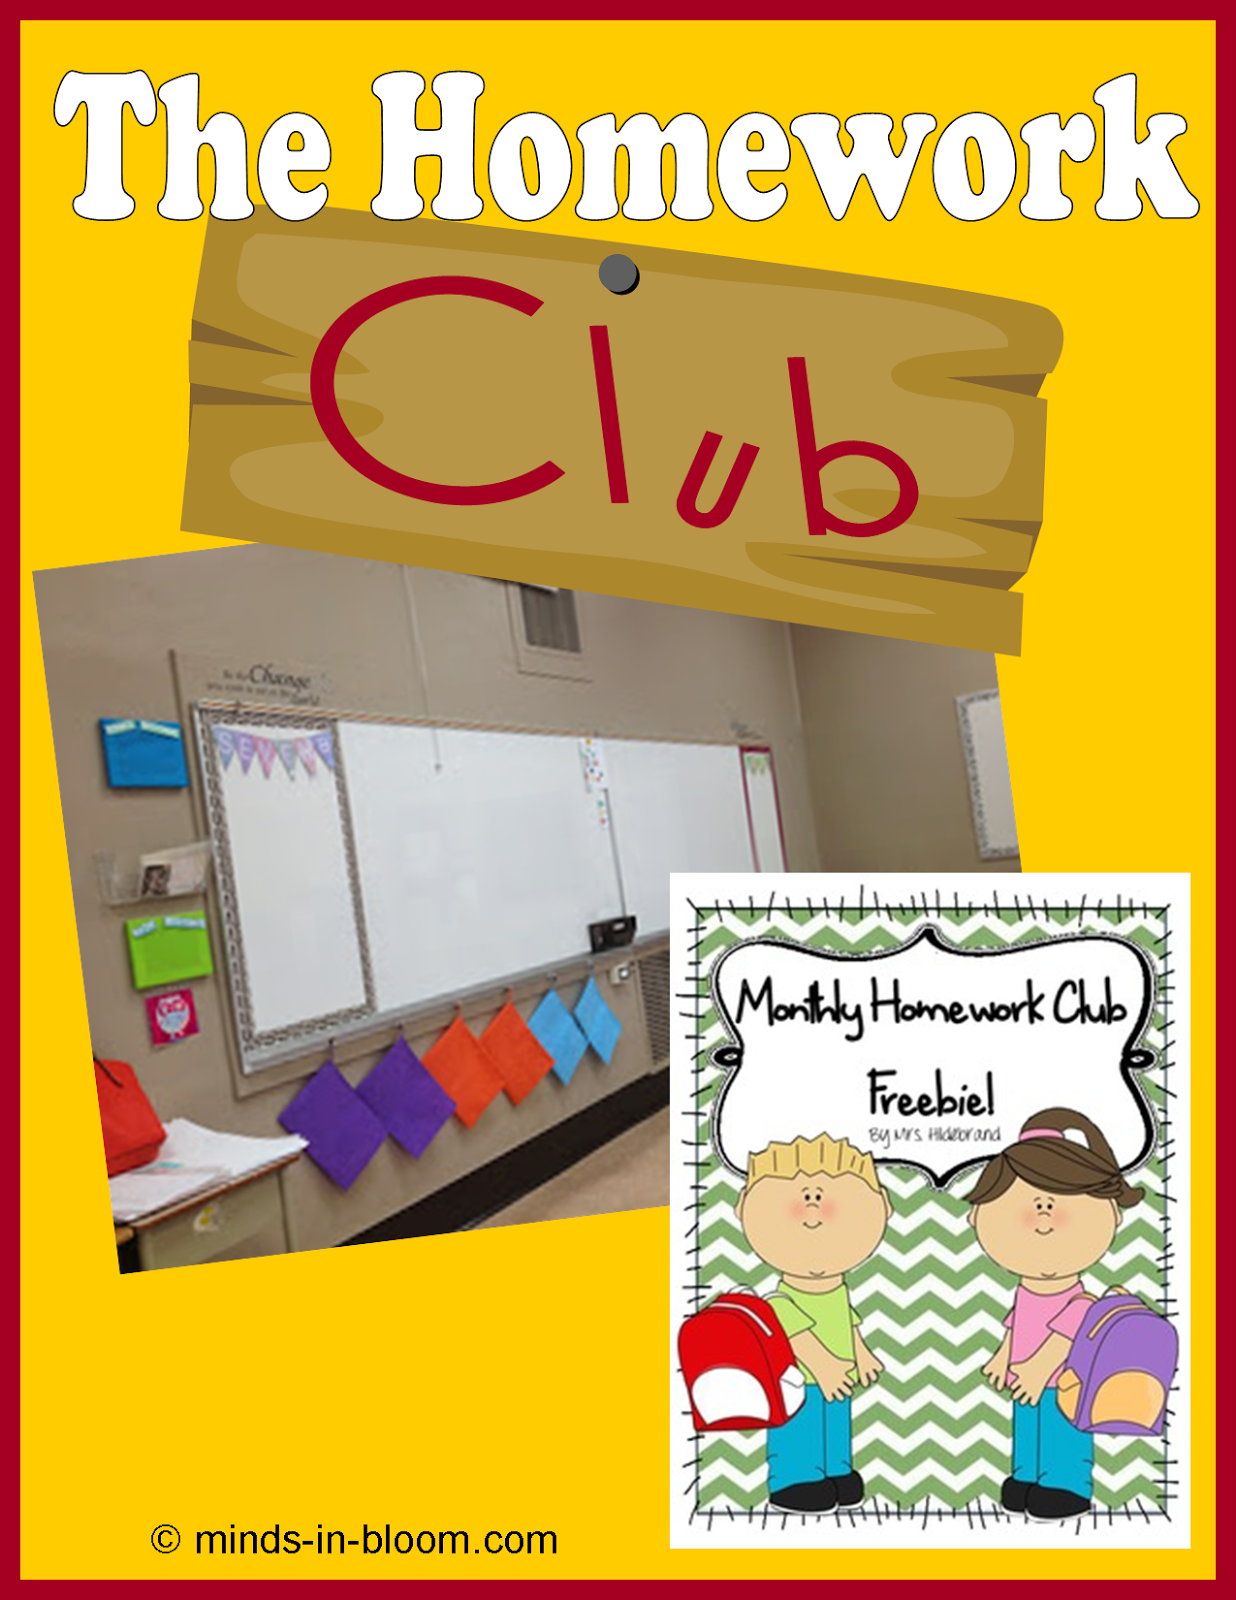 Homework club